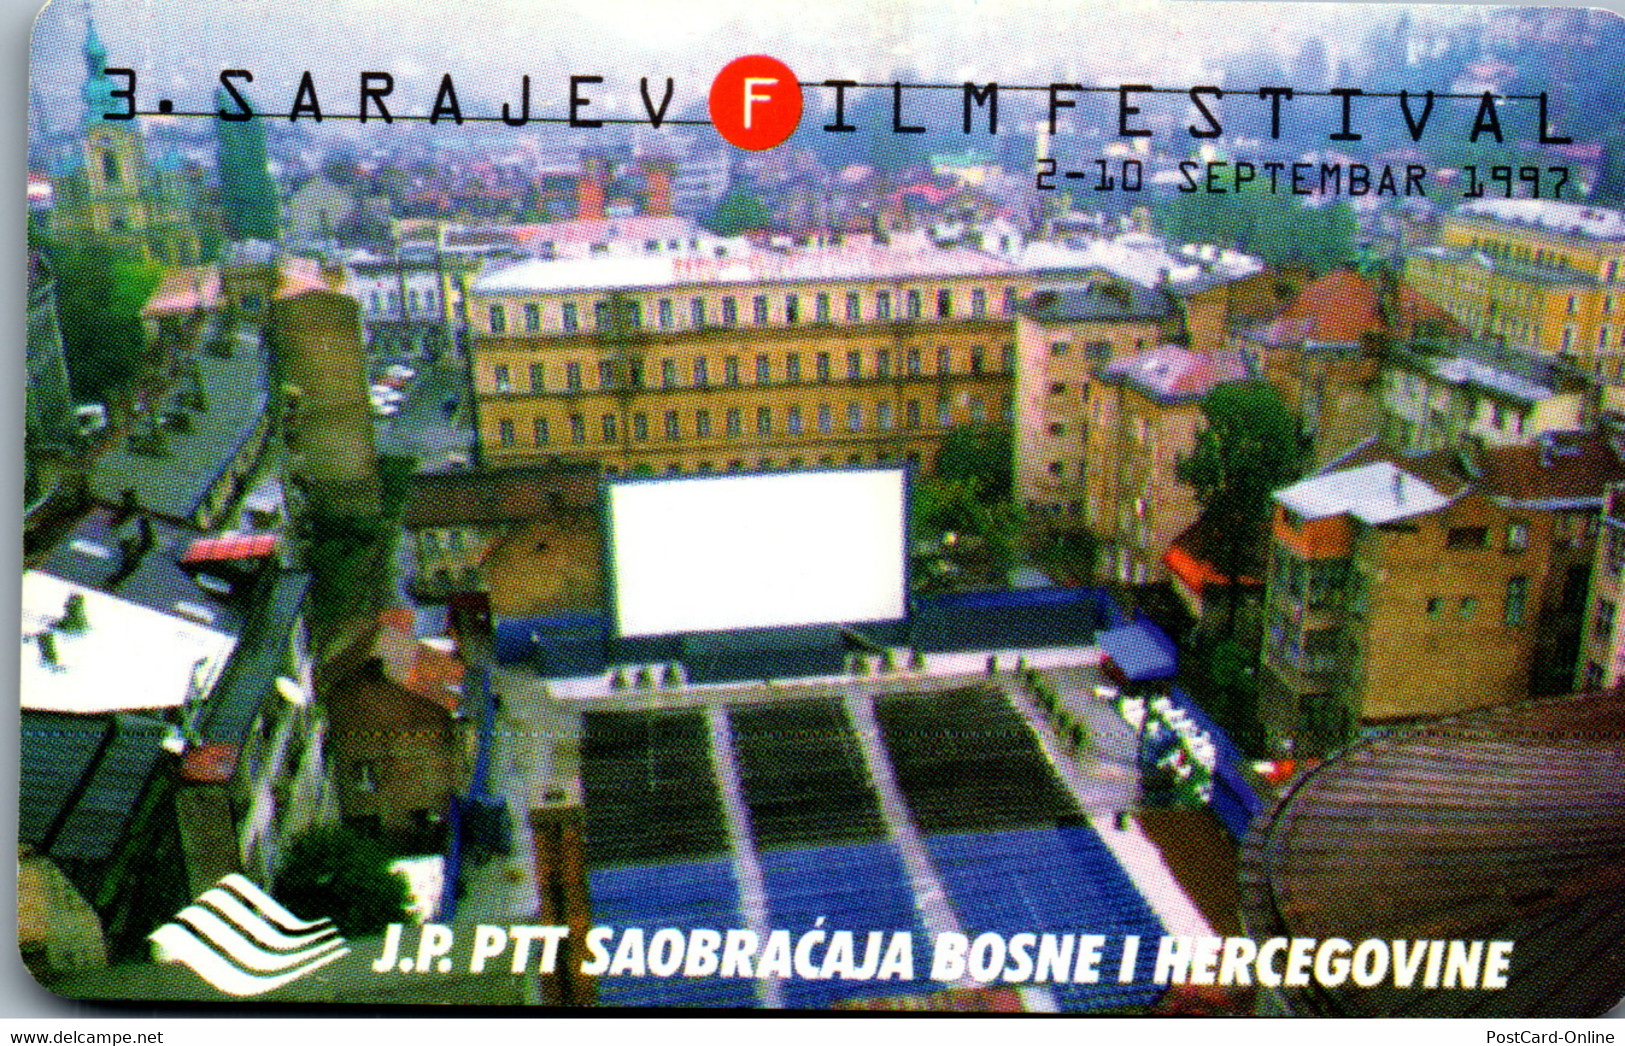 31762 - Bosnien Herzegovina - PTT , Sarajevo Filfestival 1997 - Bosnia